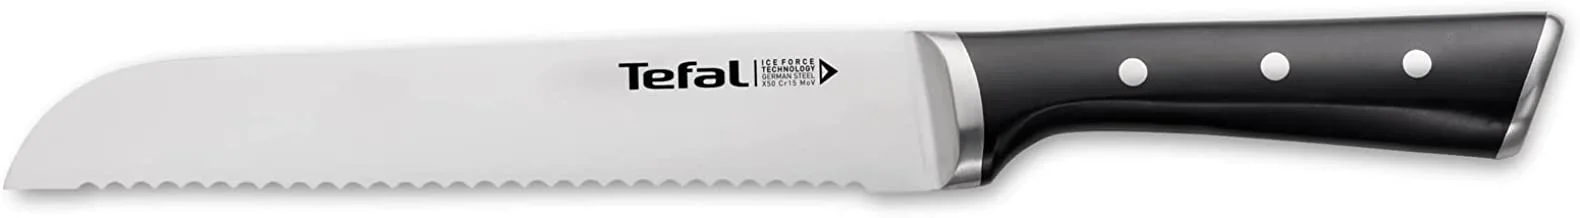 Tefal Ice Force 20 cm Bread Knife, Black, Stainless Steel, K2320414